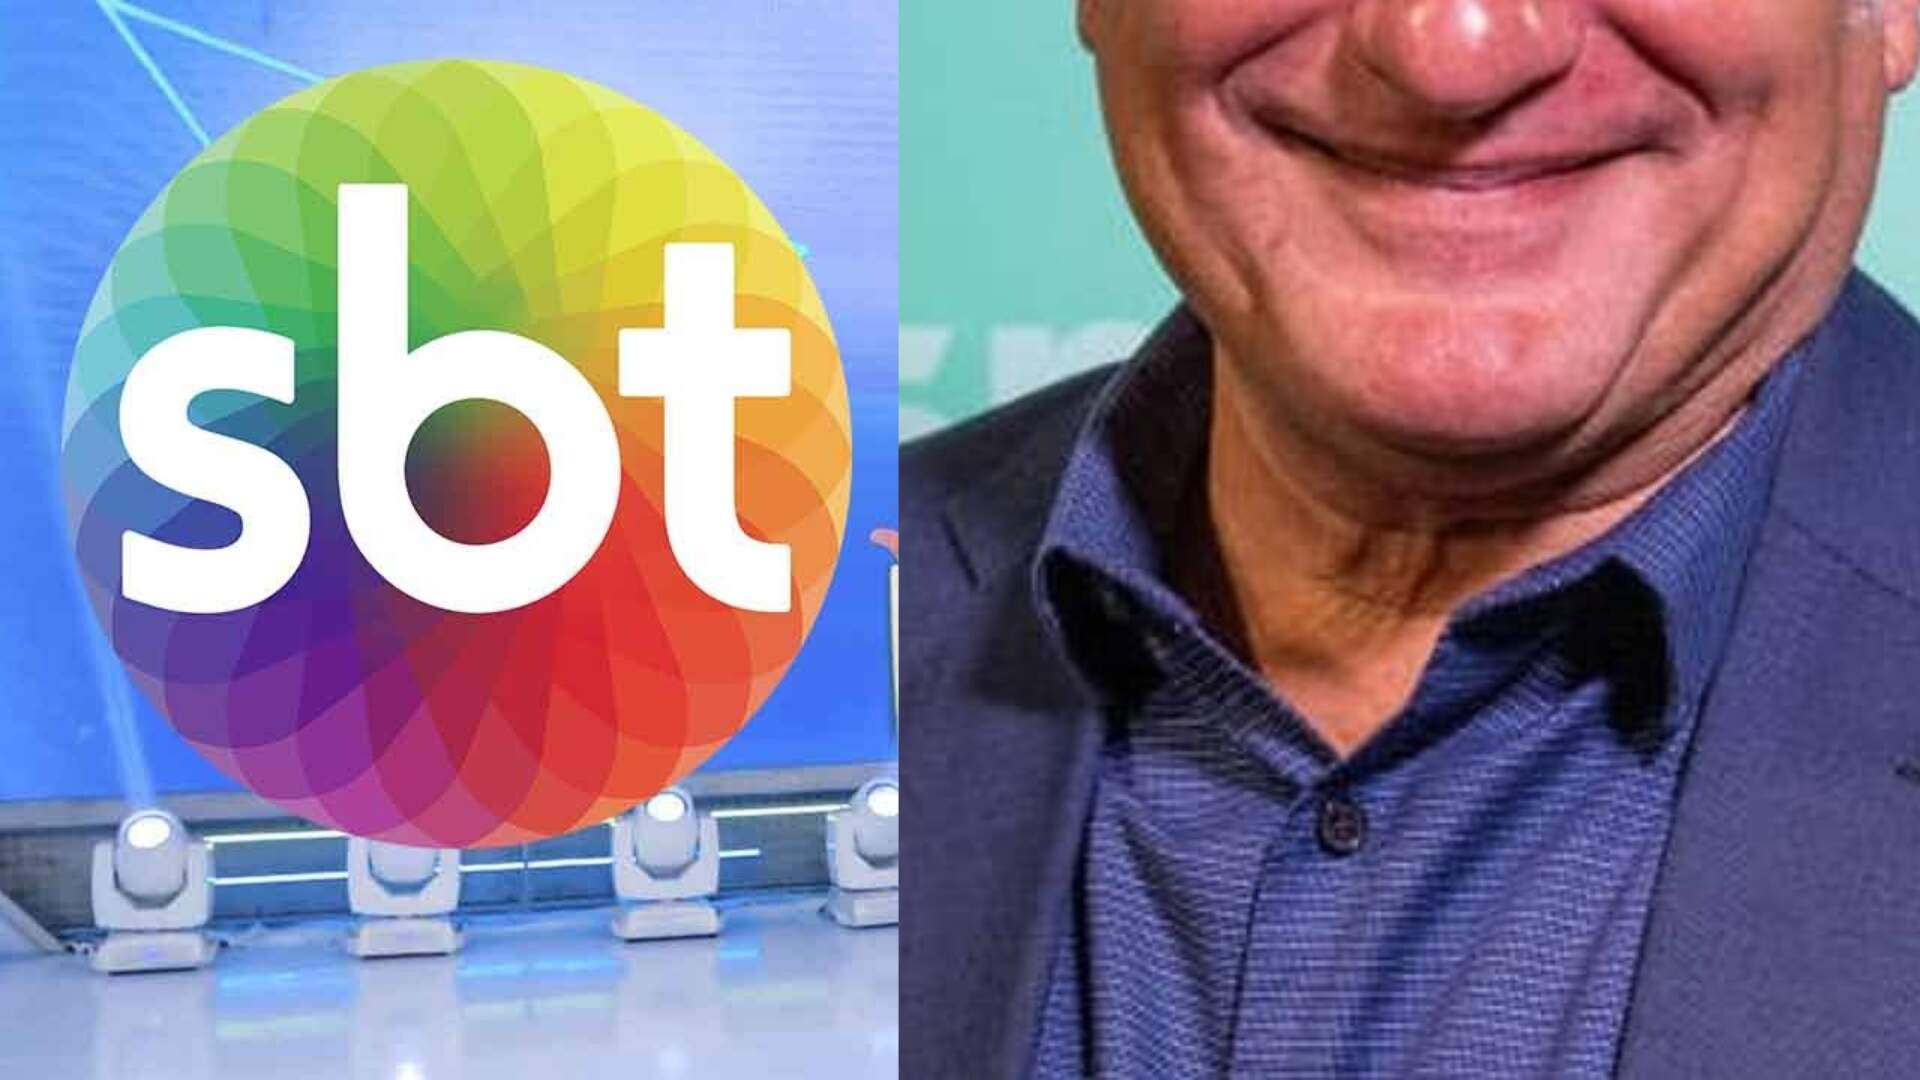 Narrador veterano da TV Globo que foi demitido após 35 anos vai para emissora rival: “Novidades!”